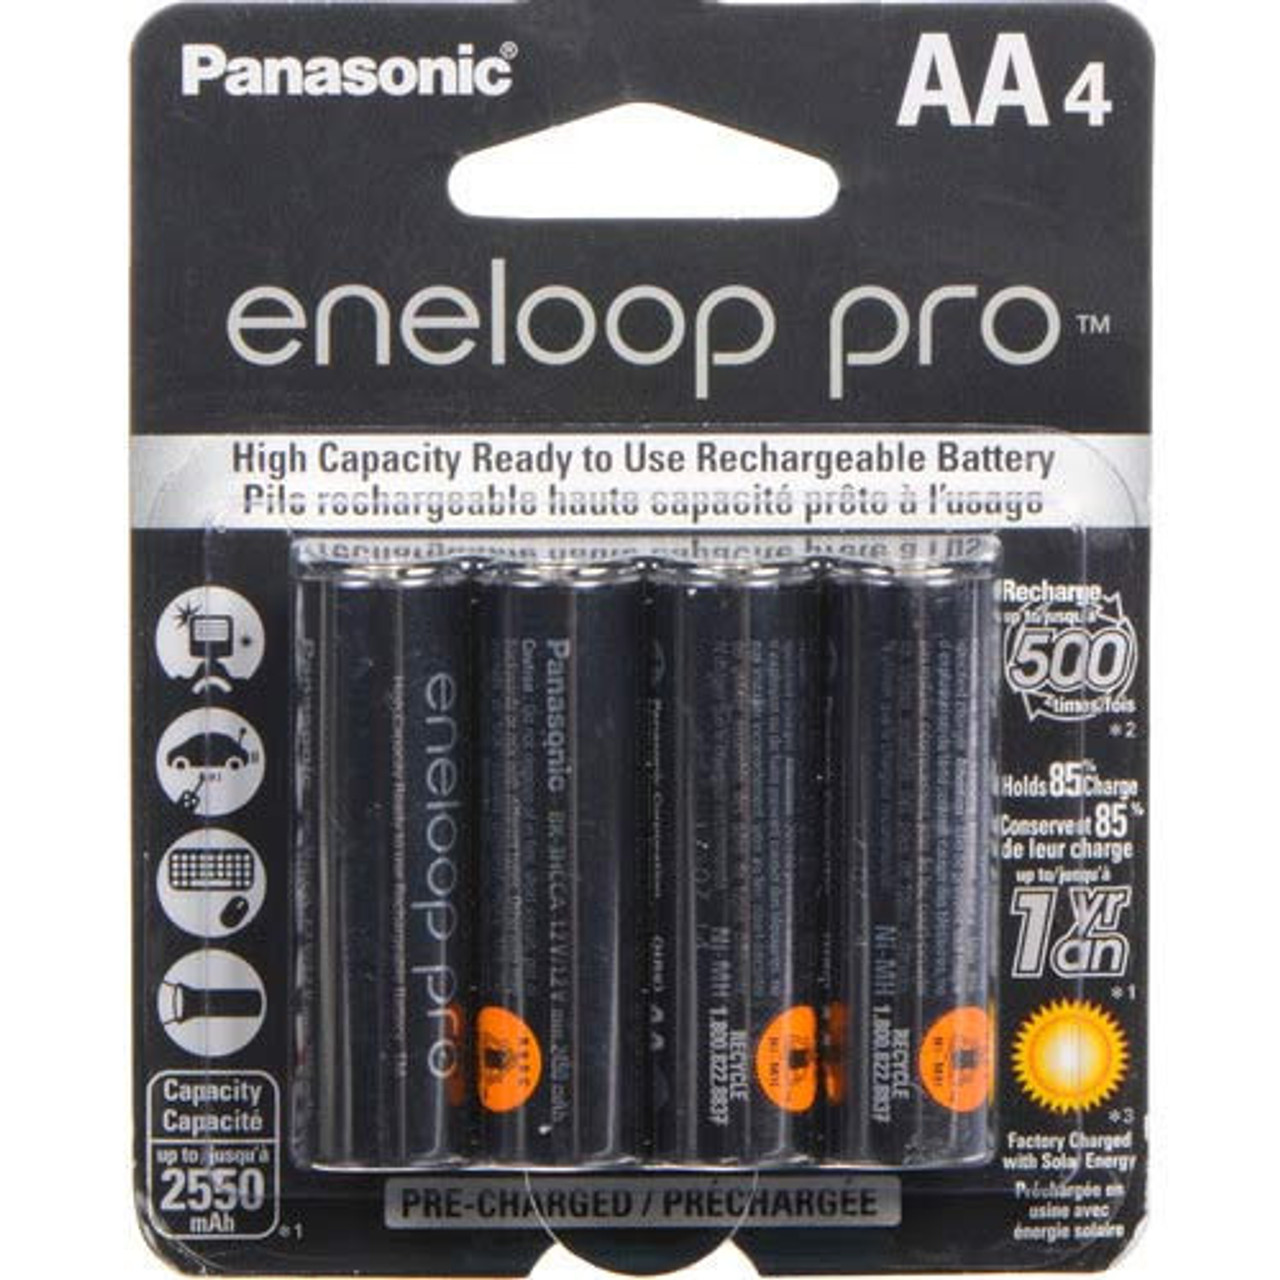 Panasonic Eneloop C Size Battery Adapters for Use With Eneloop AA